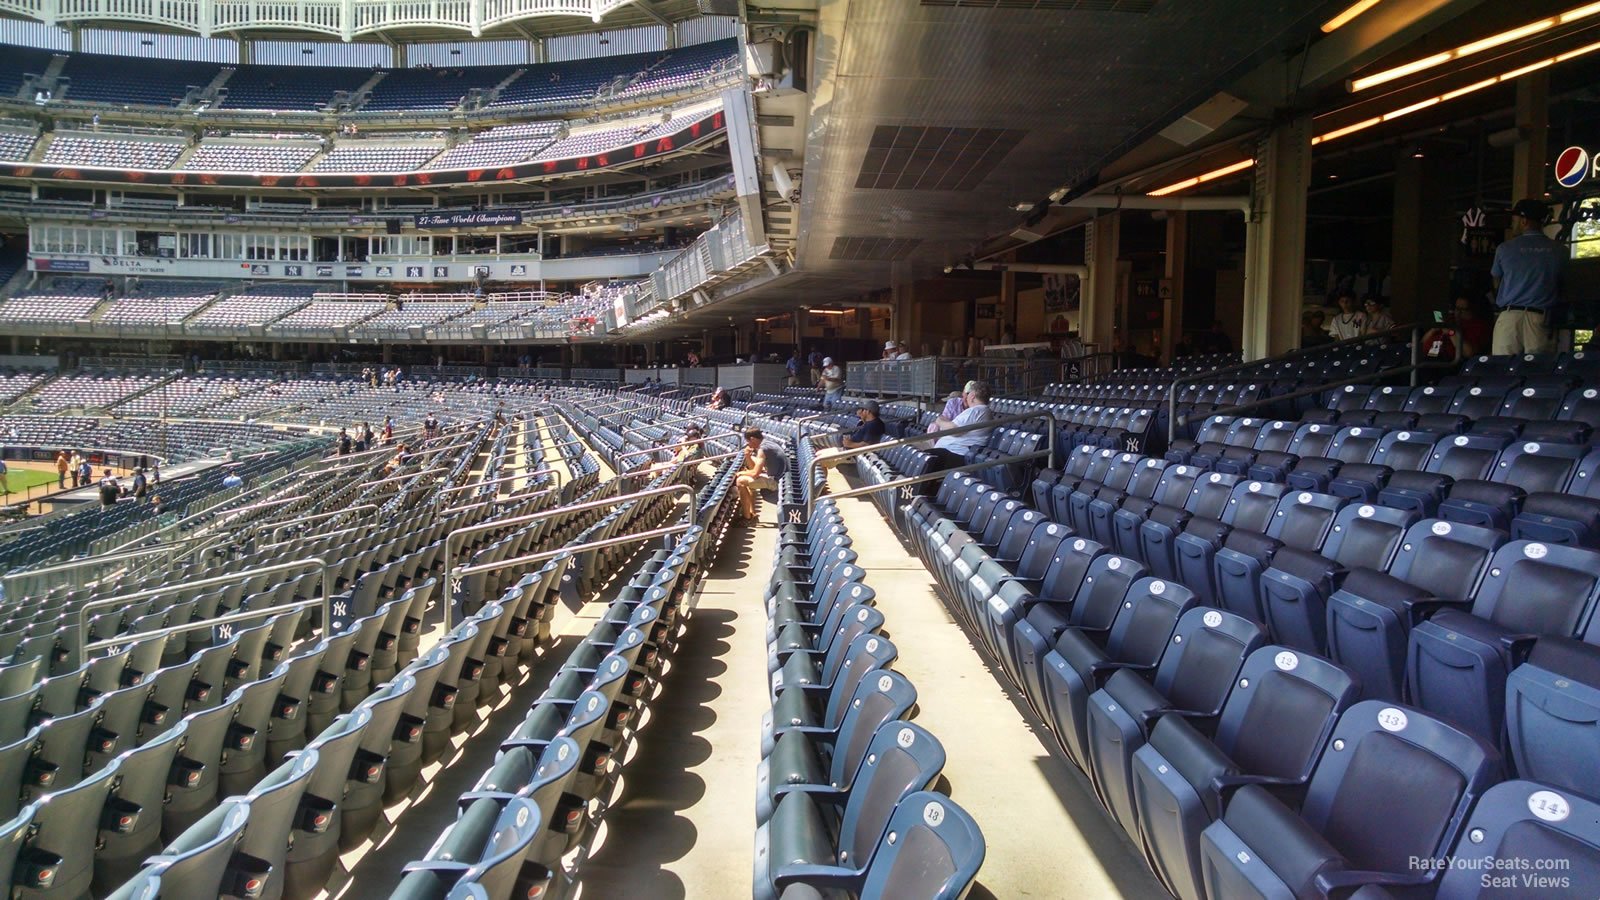 Section 128 at Yankee Stadium - RateYourSeats.com